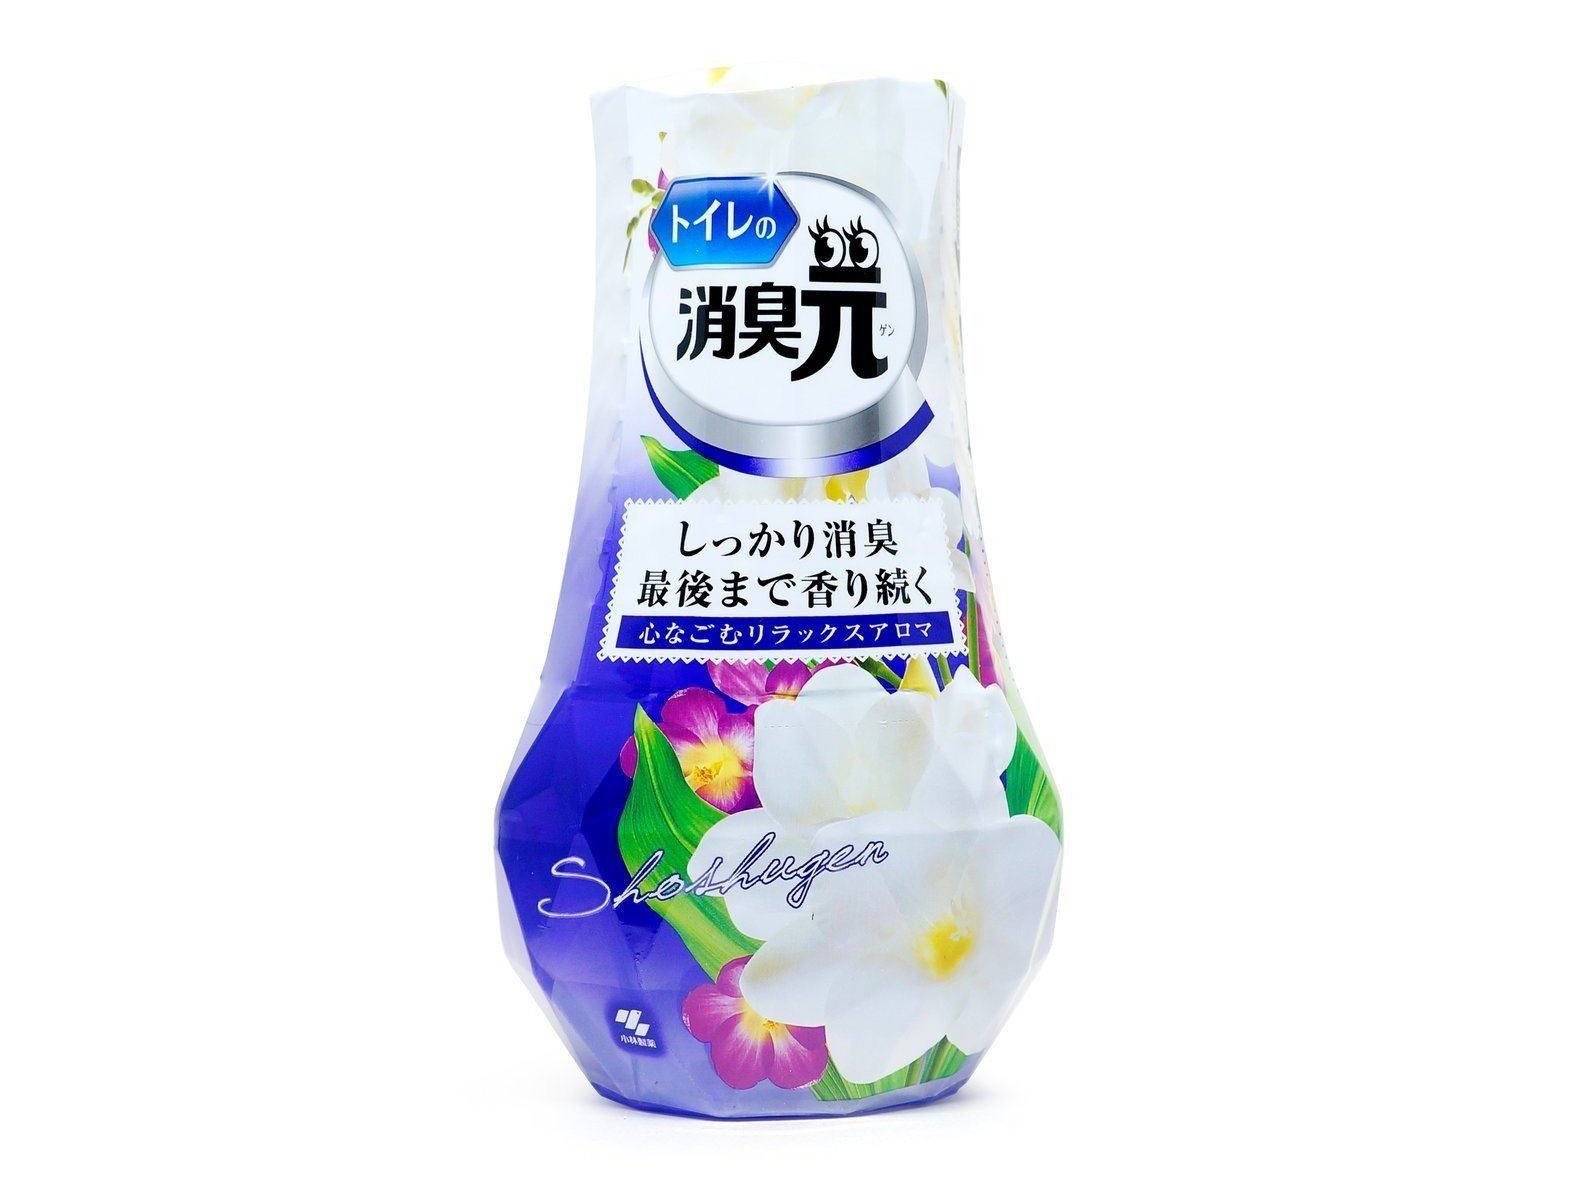 KOBAYASHI Toilet Odor Air Freshener Deodorizer ml Relax Aroma Floral